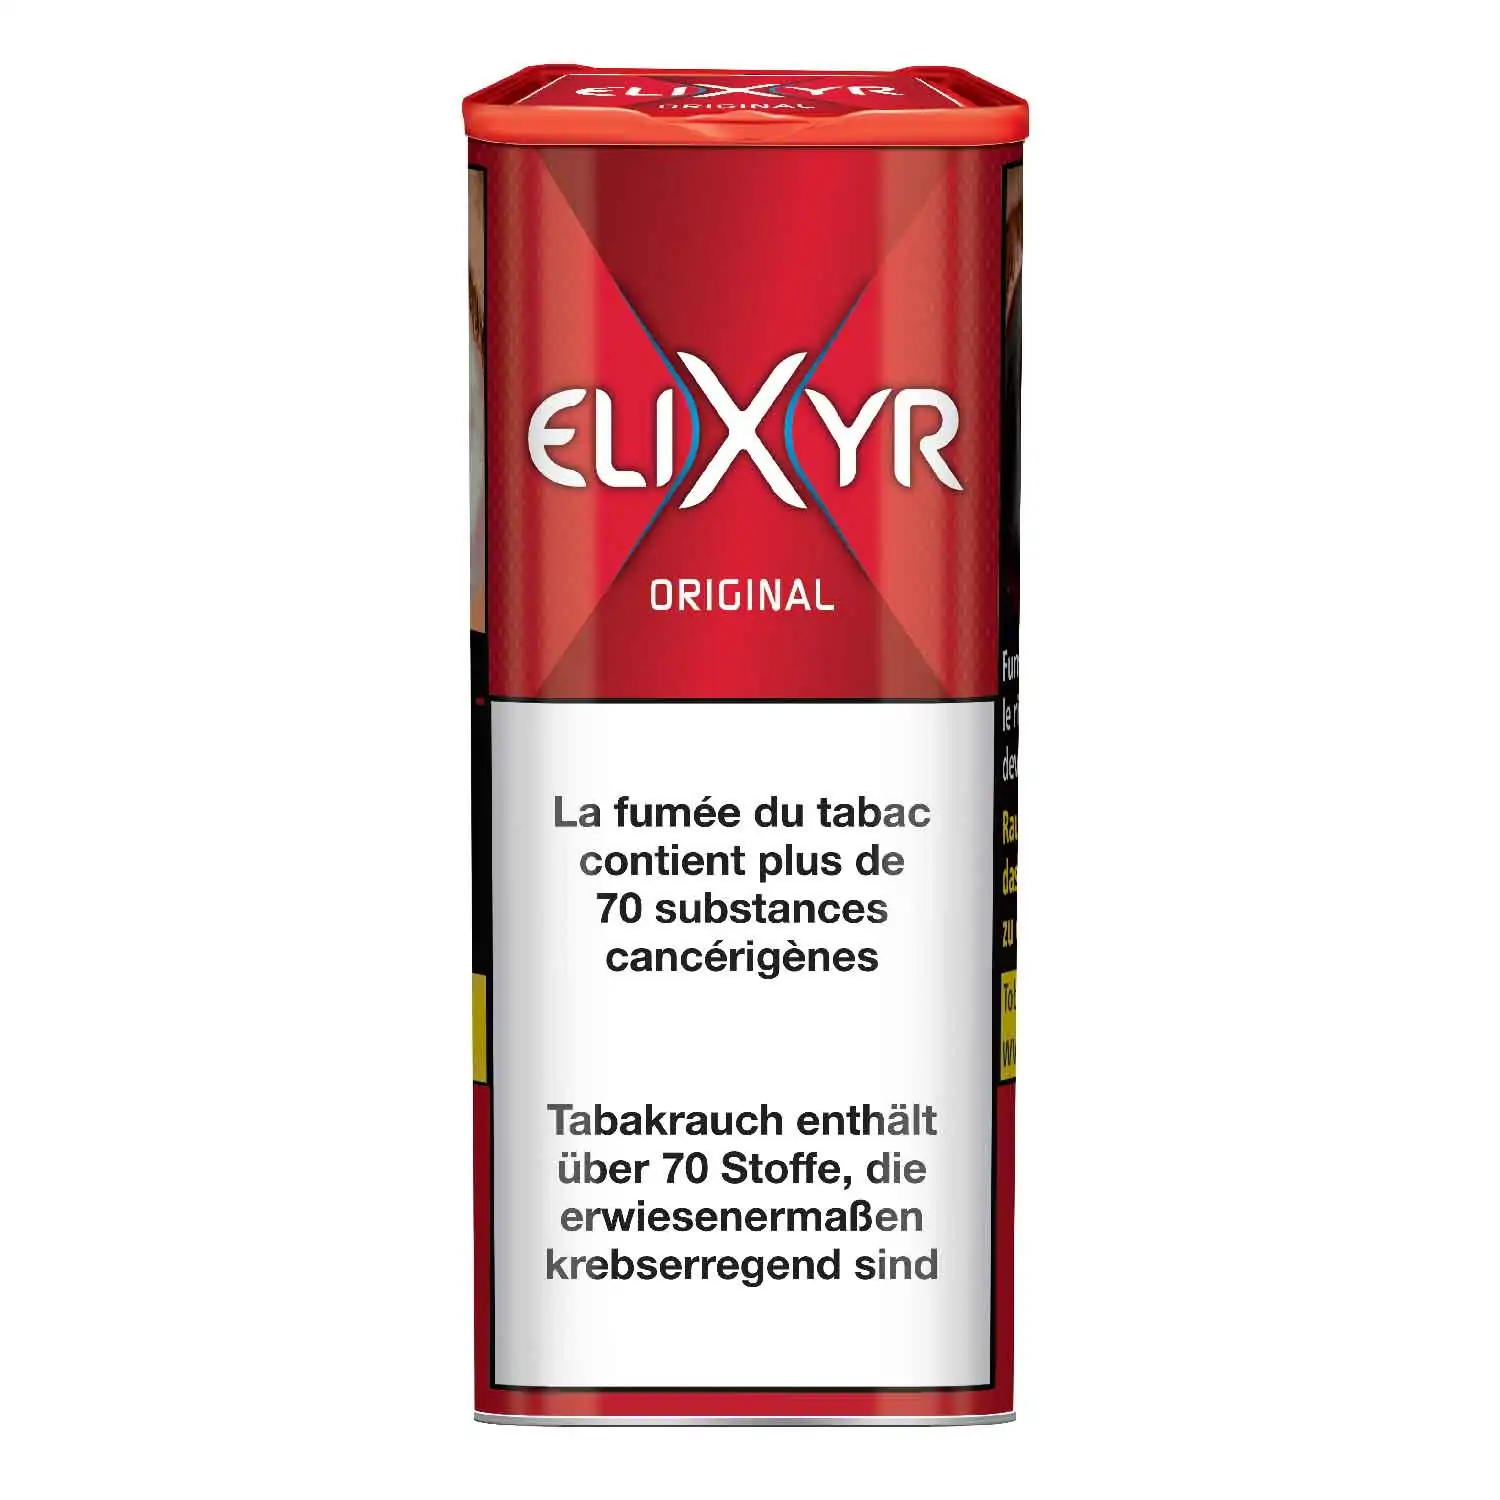 Elixyr original red 300g - Buy at Real Tobacco